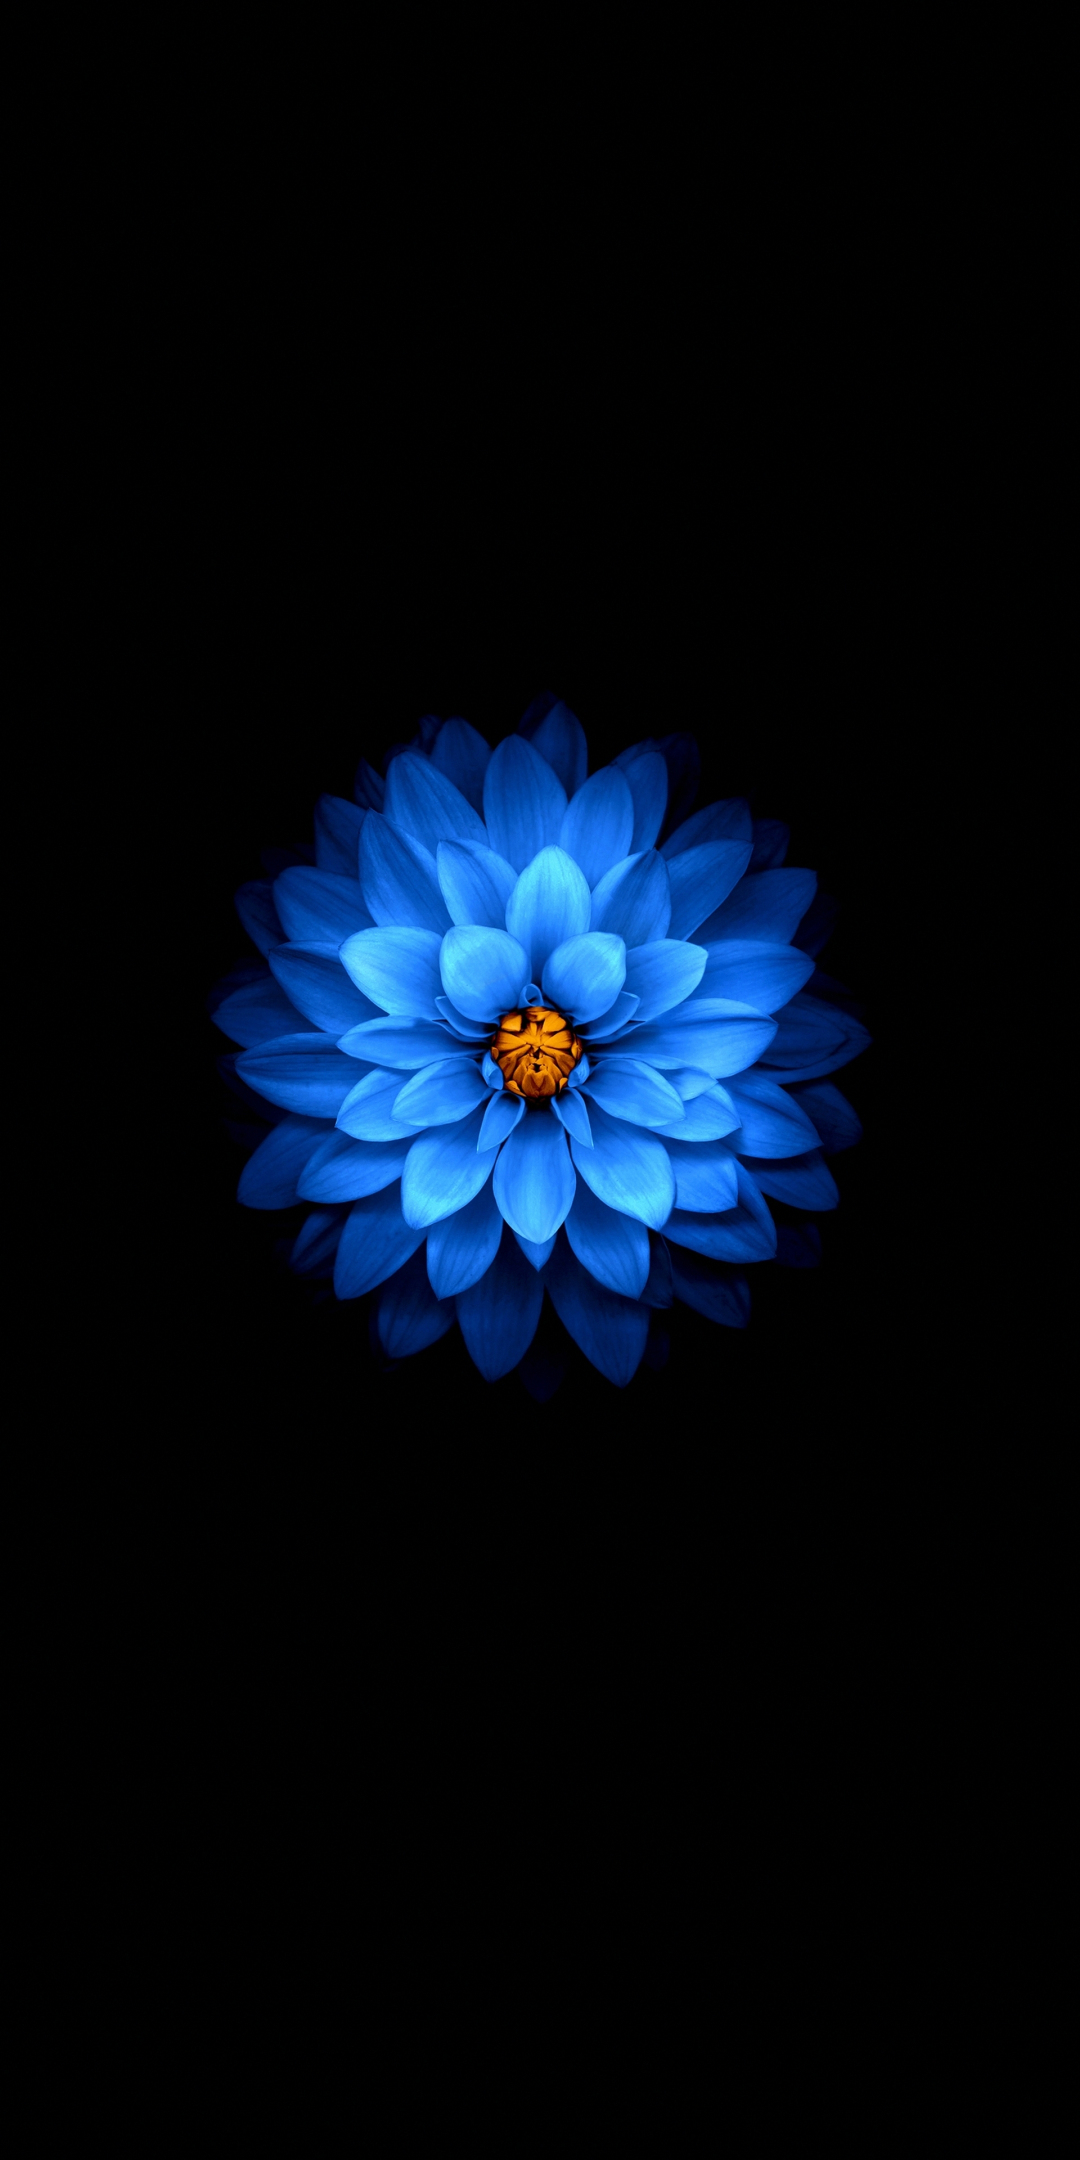 Blue flower, dark, amoled, 1080x2160 wallpaper